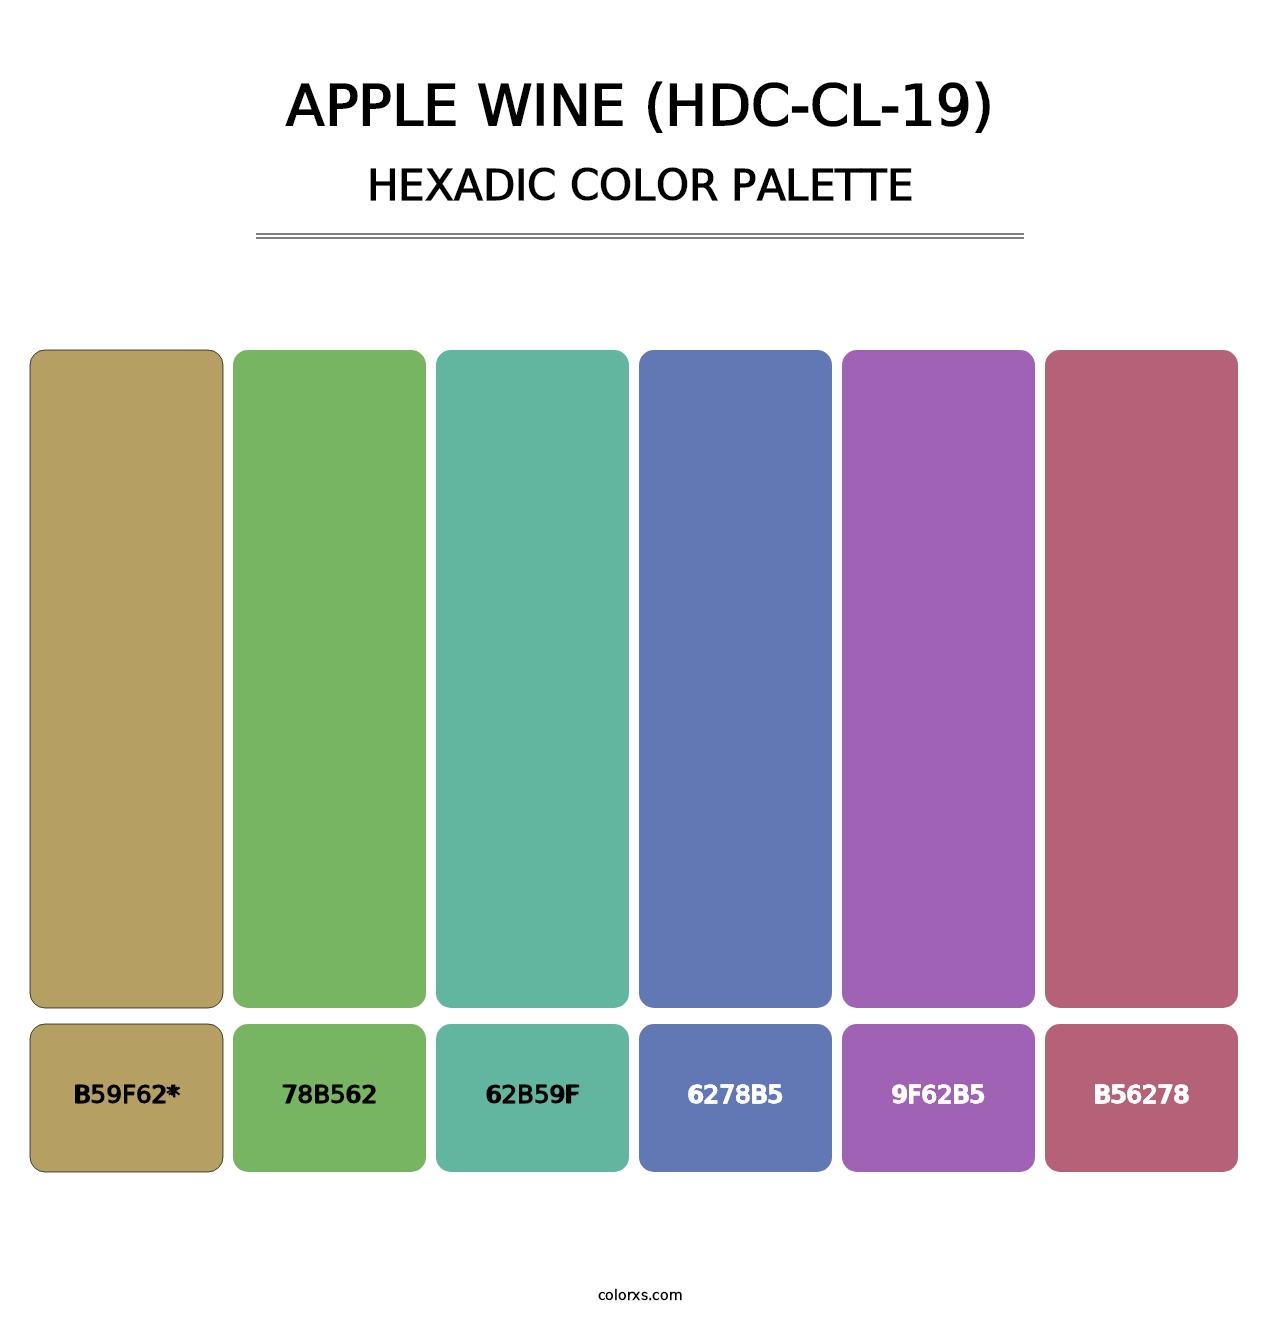 Apple Wine (HDC-CL-19) - Hexadic Color Palette